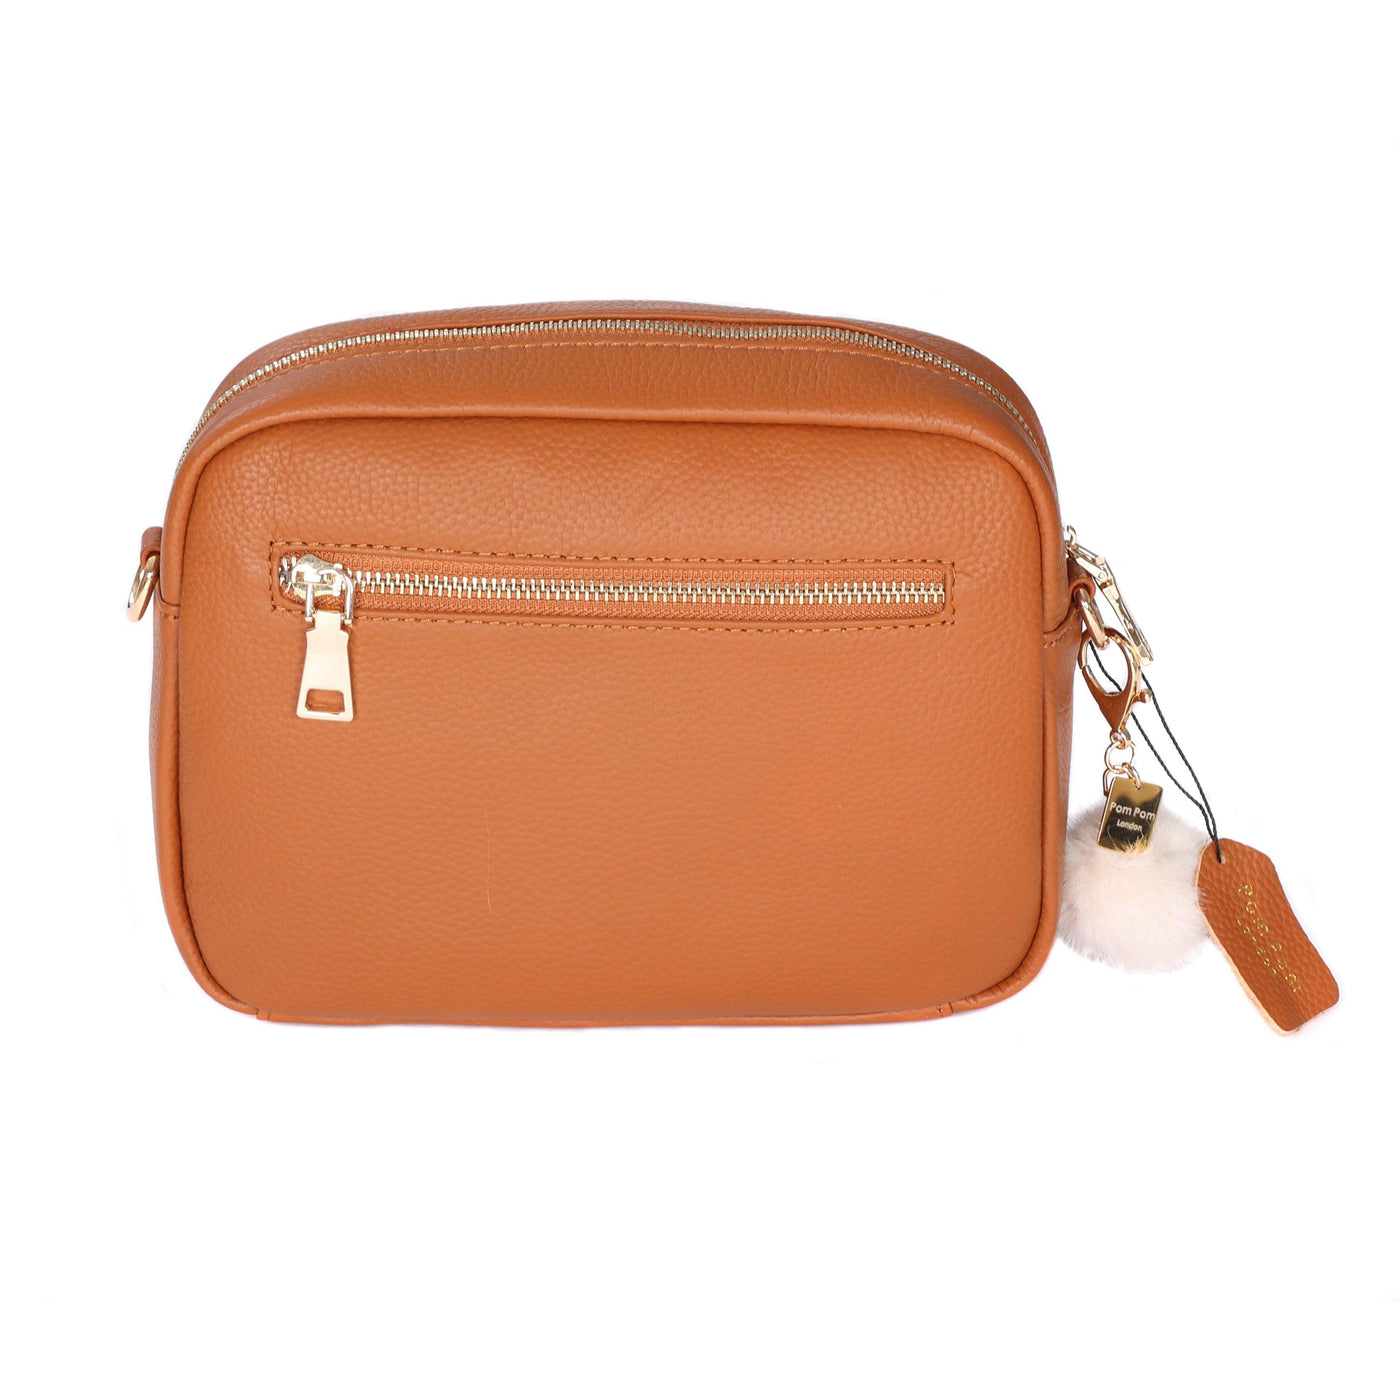 Mayfair Plus Bag Tan & Accessories - Pom Pom London